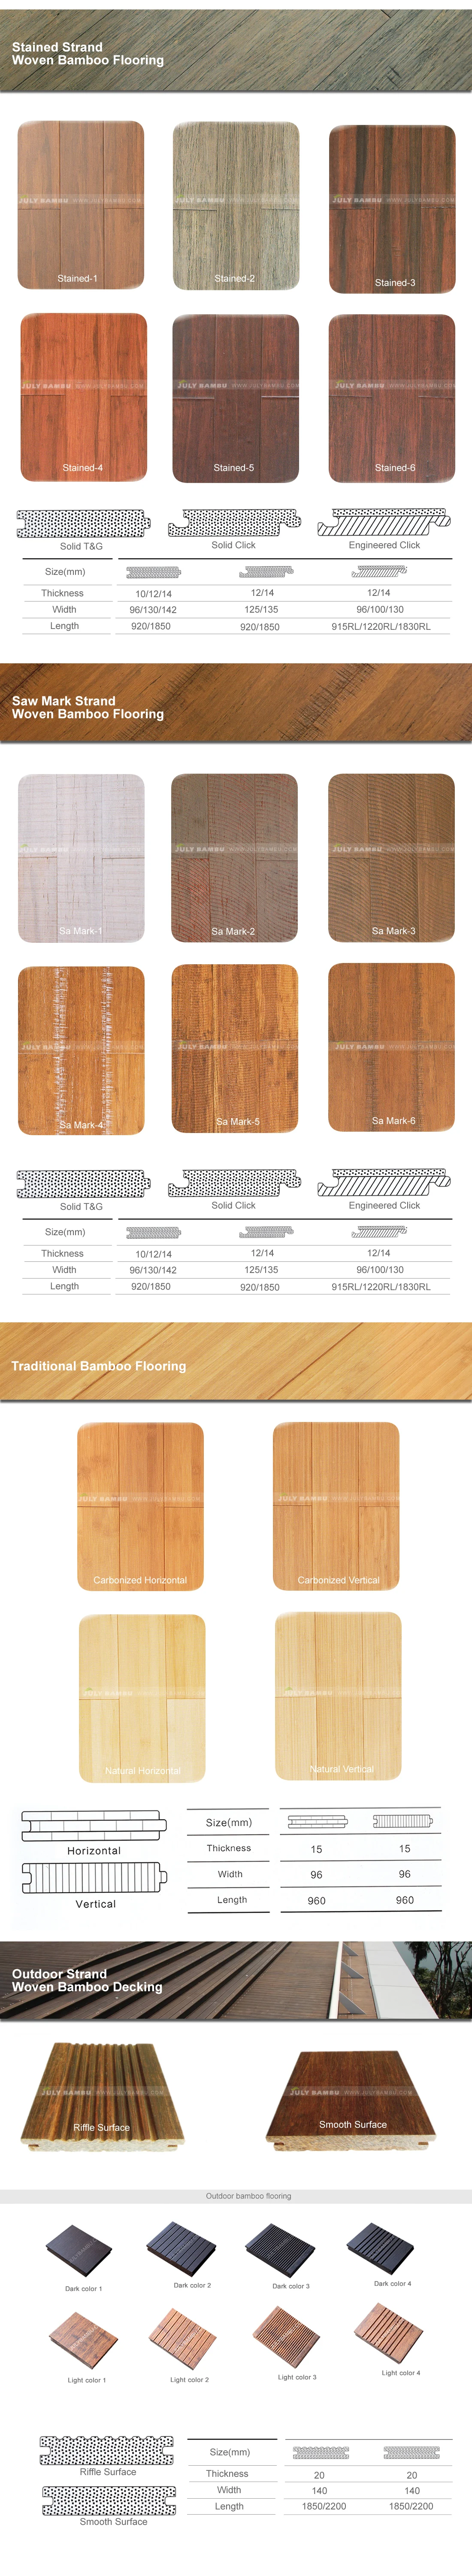 bamboo flooring-2